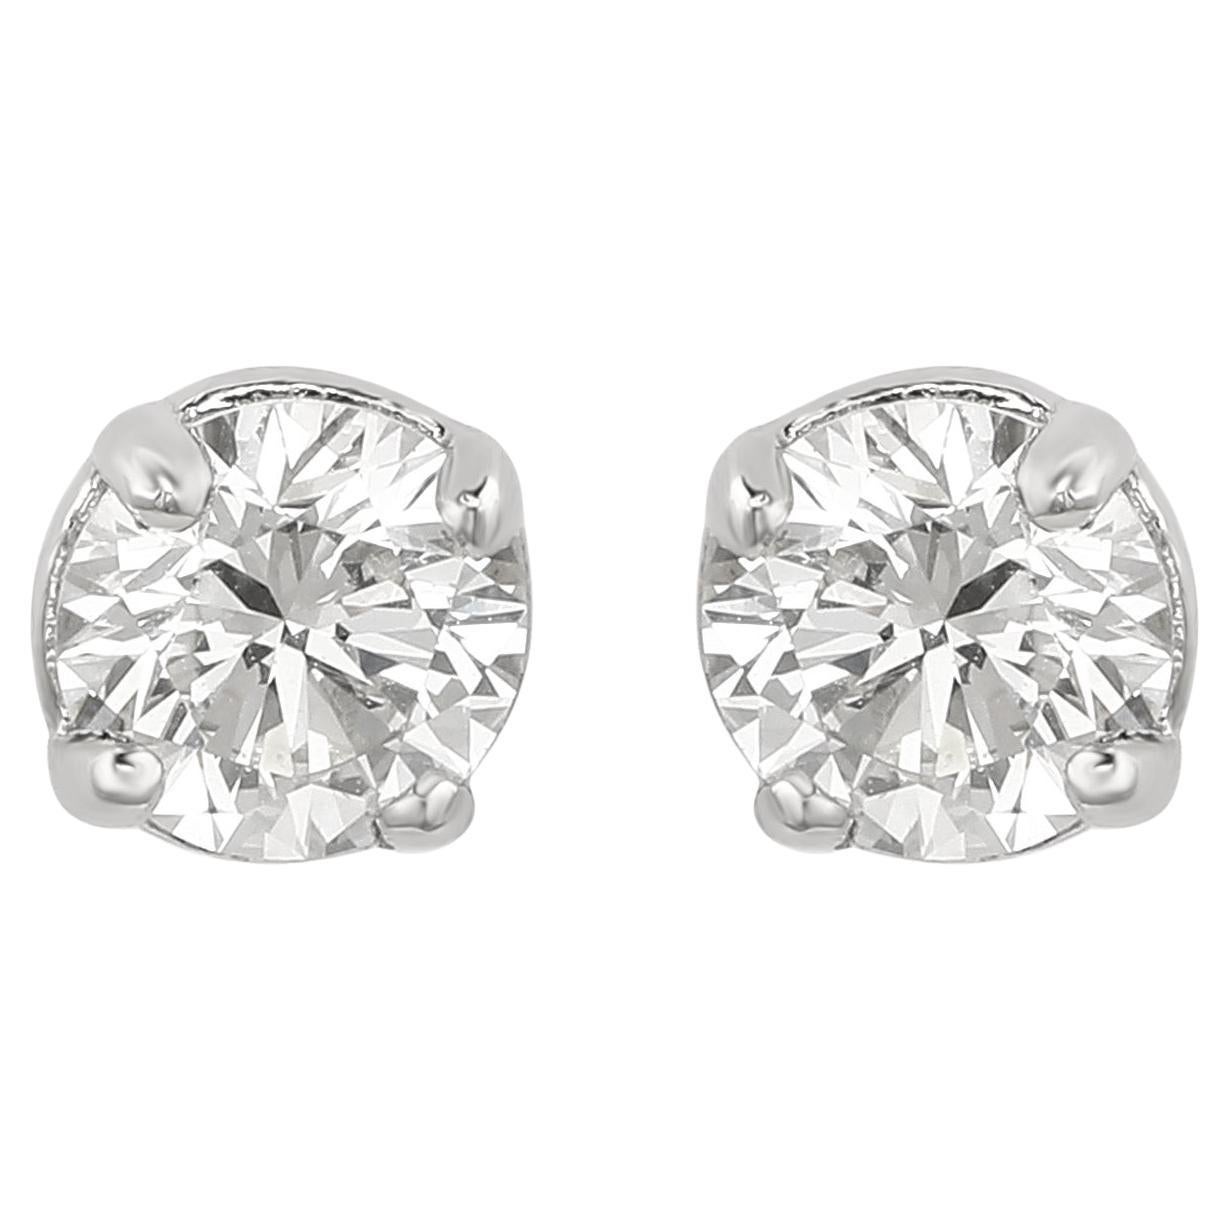 Suzy Levian 14K White Gold Classic Four-Prong 0.33 ct. tw. Diamond Stud Earrings